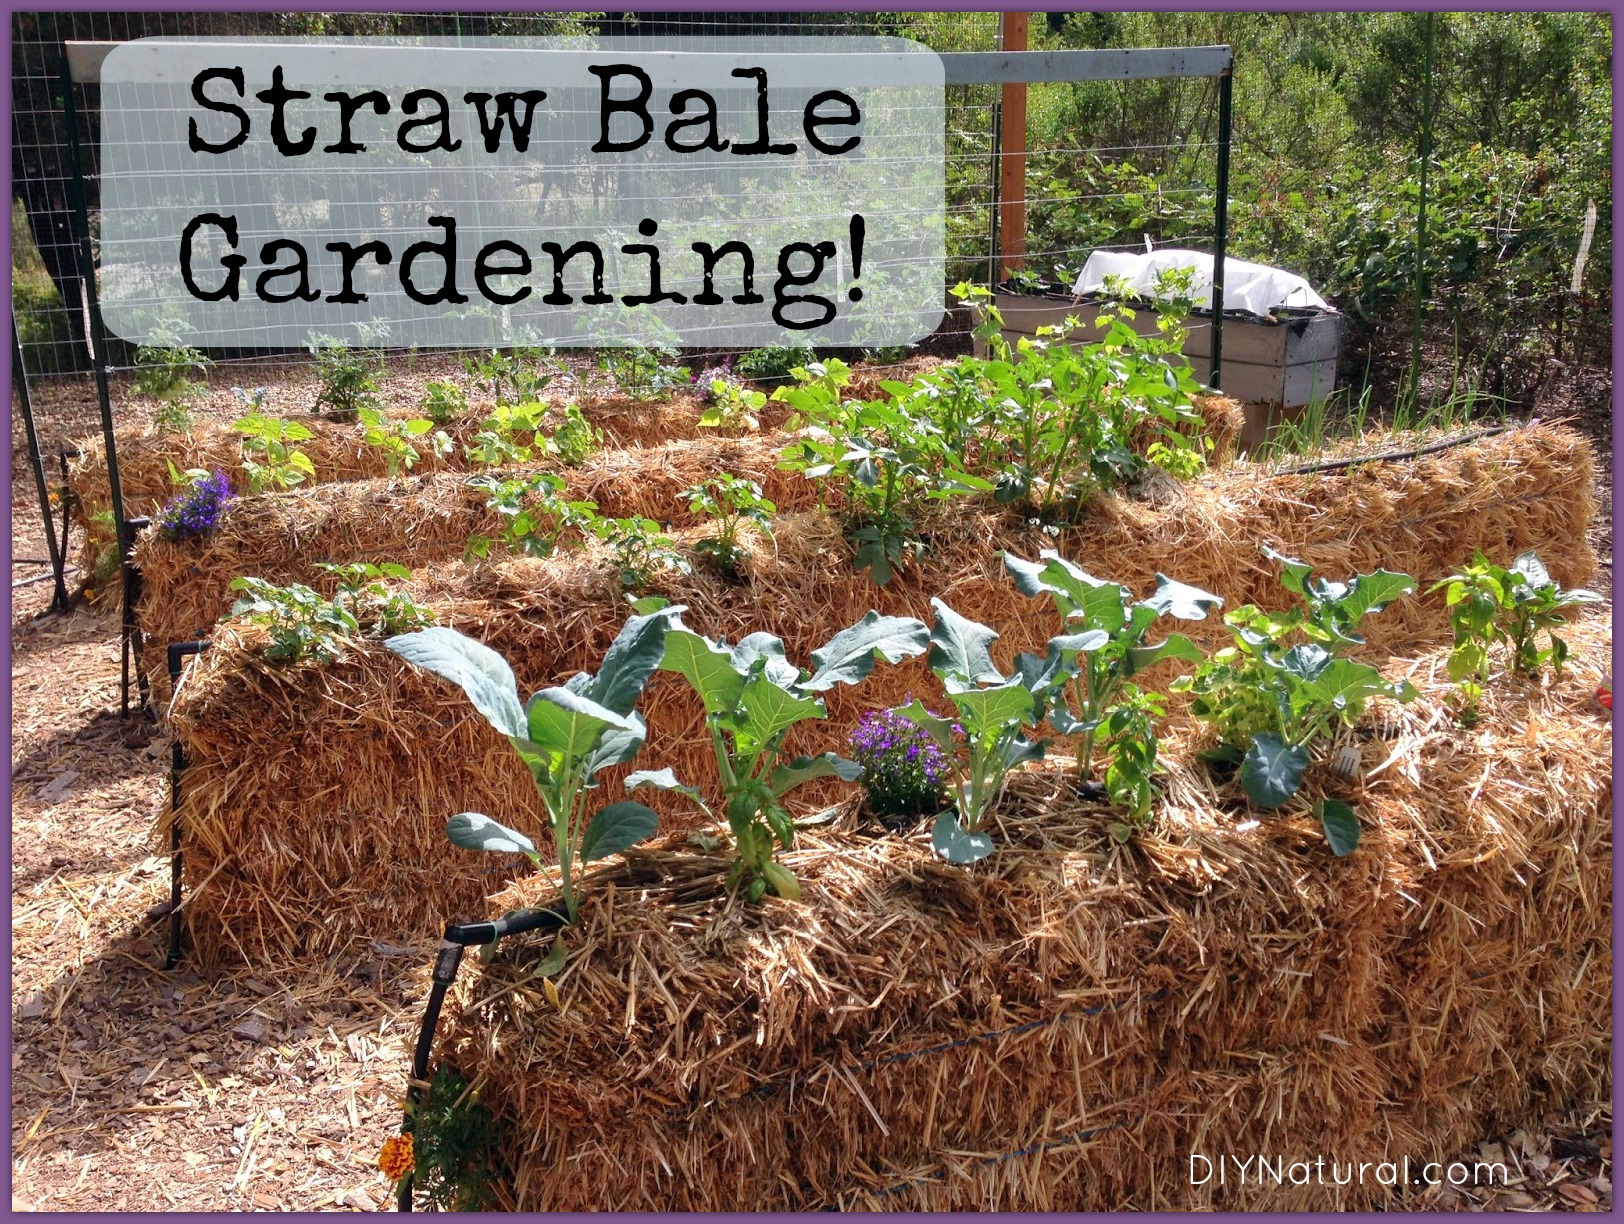 Straw Bale Gardening: An Easy Way To Grow Food